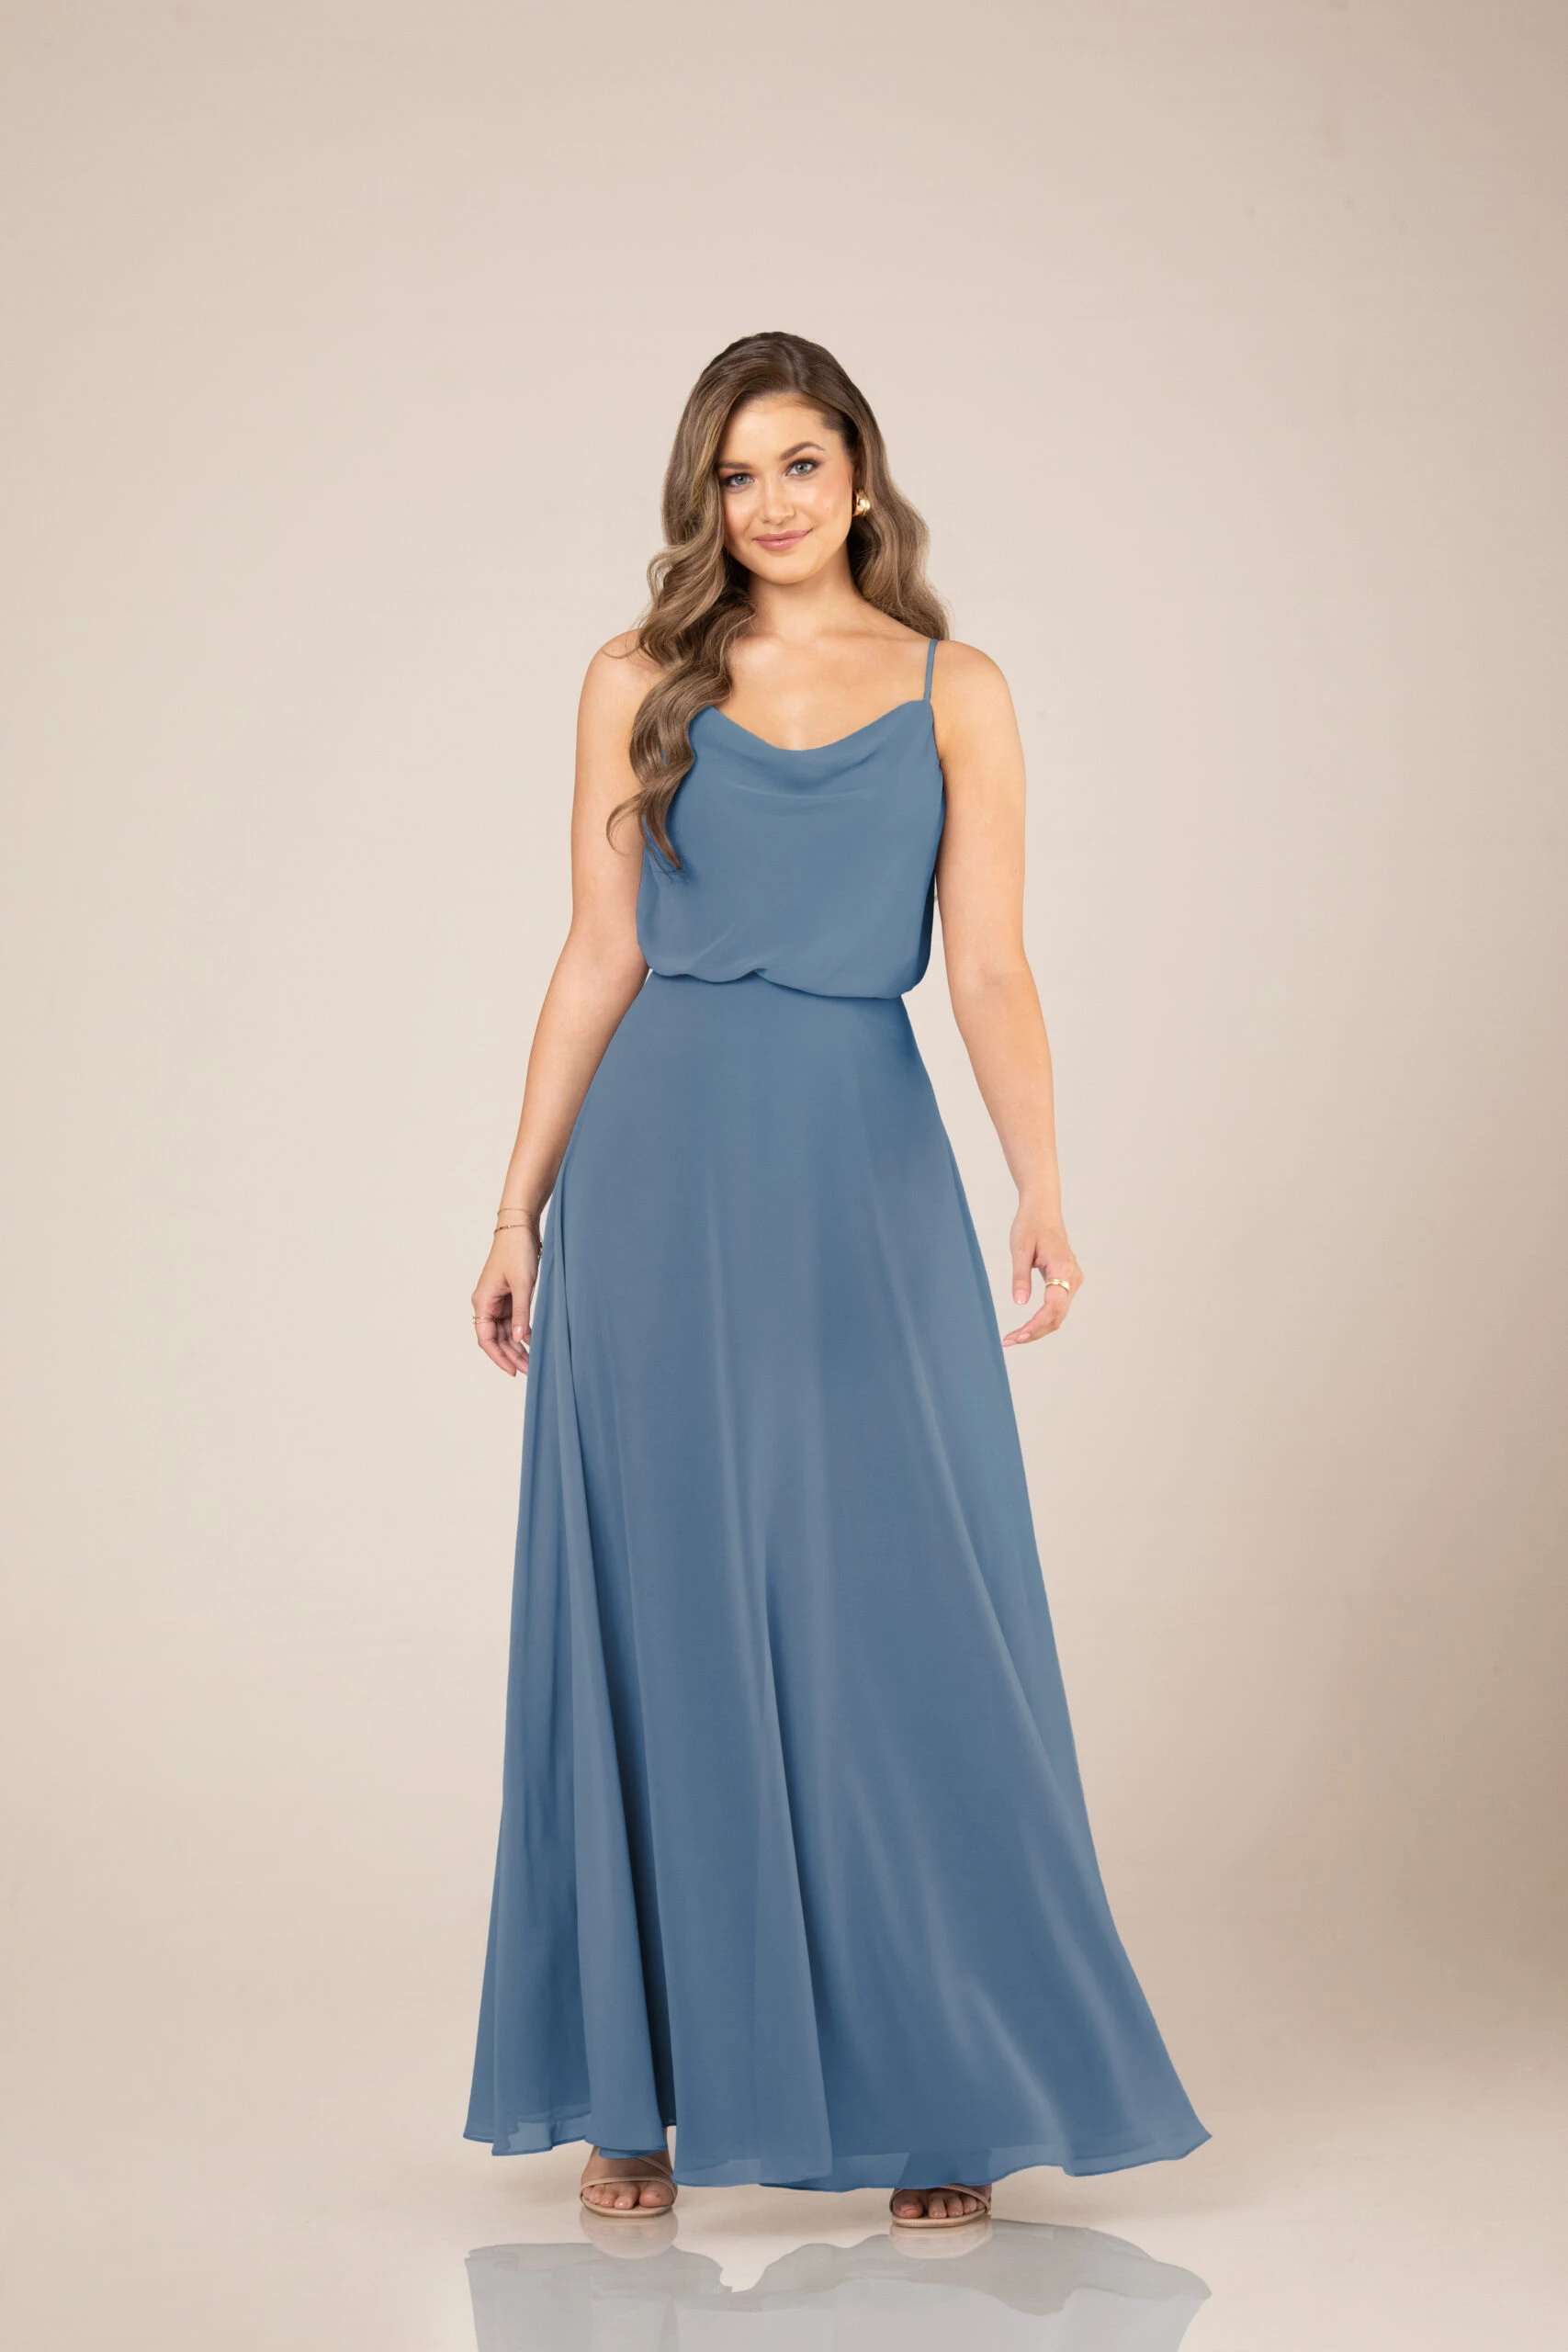 blue cowl neck bridesmaid dress - 9504 by Sorella Vita